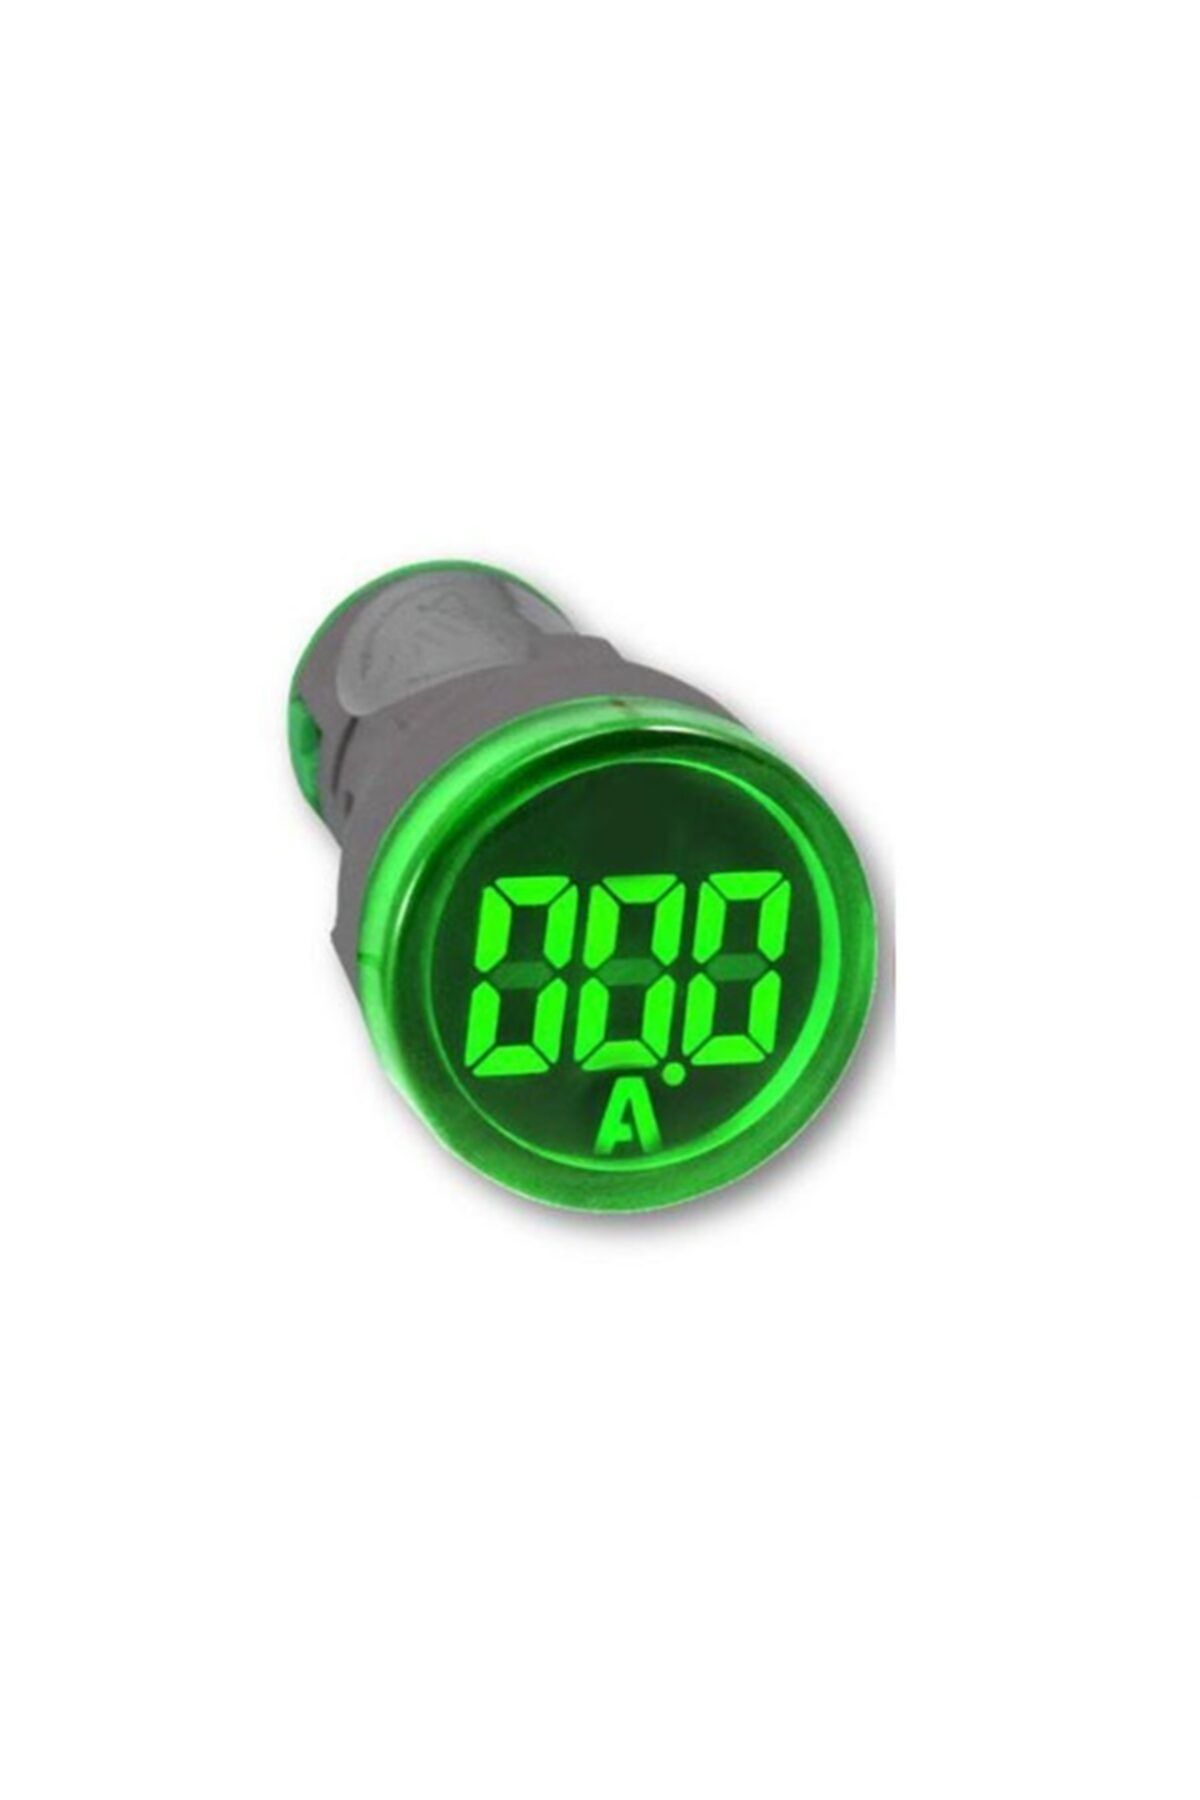 TORK Ledli Ampermetre Digital Ekranlı Ø22 -100v Yeşil